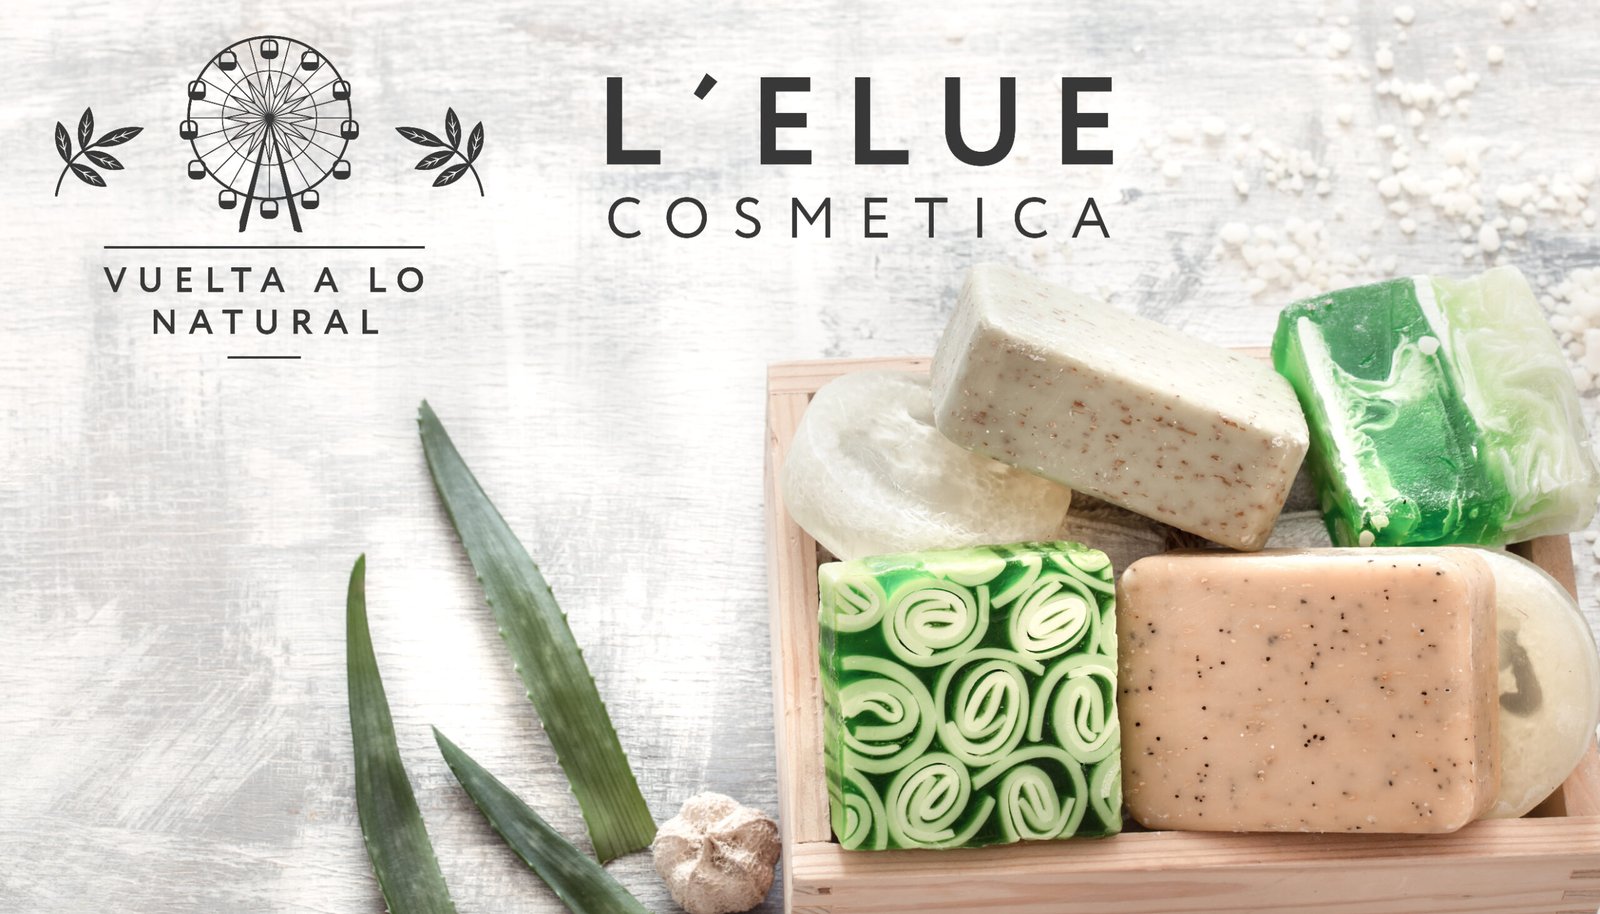 Branding cosmética natural L’elue